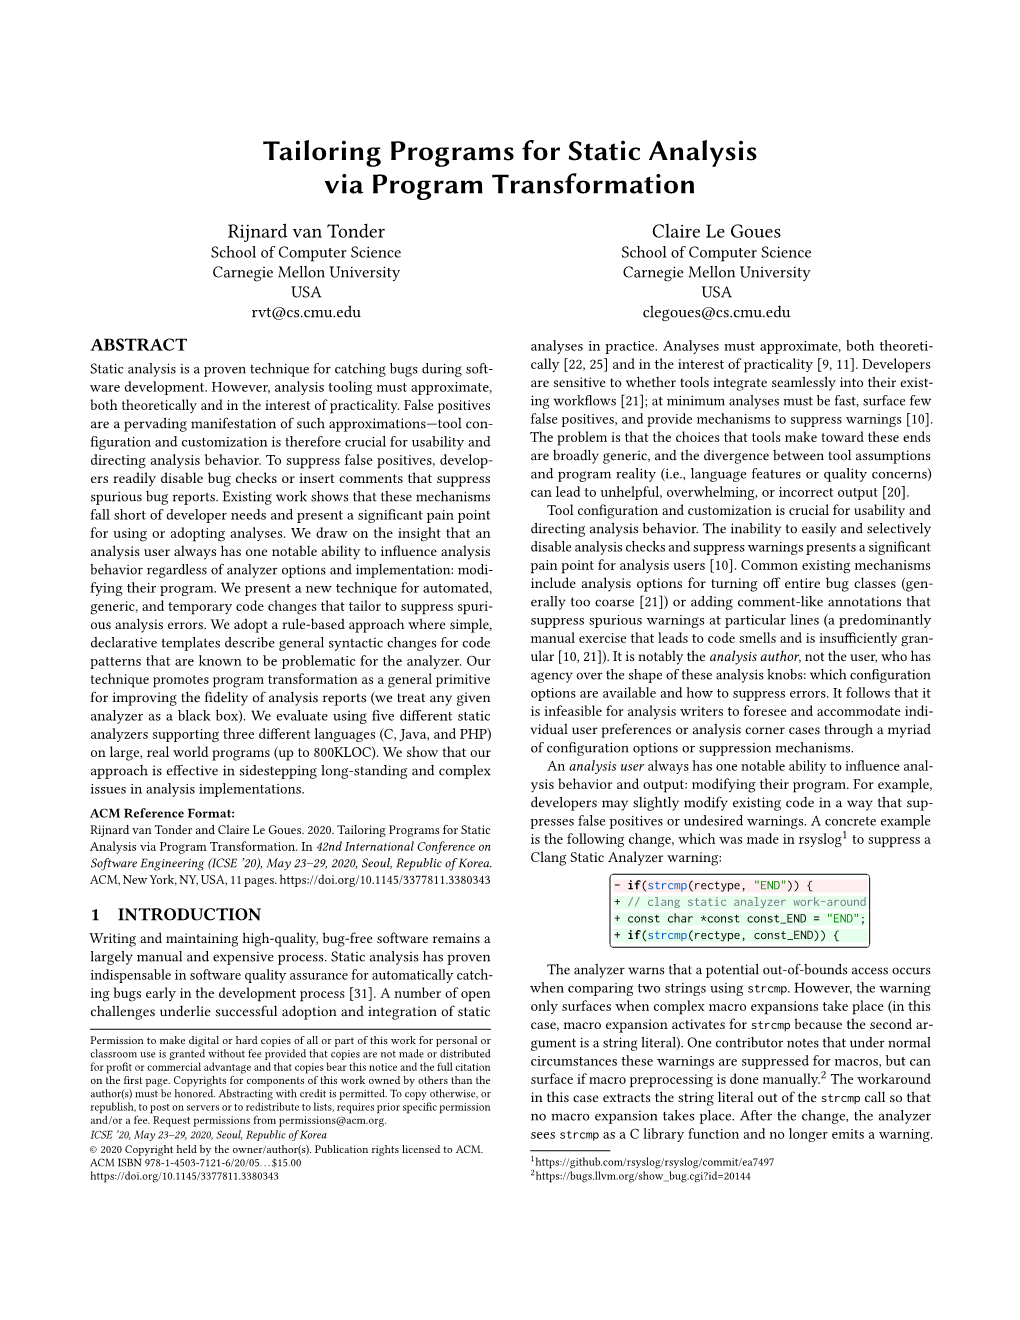 Tailoring Programs for Static Analysis Via Program Transformation